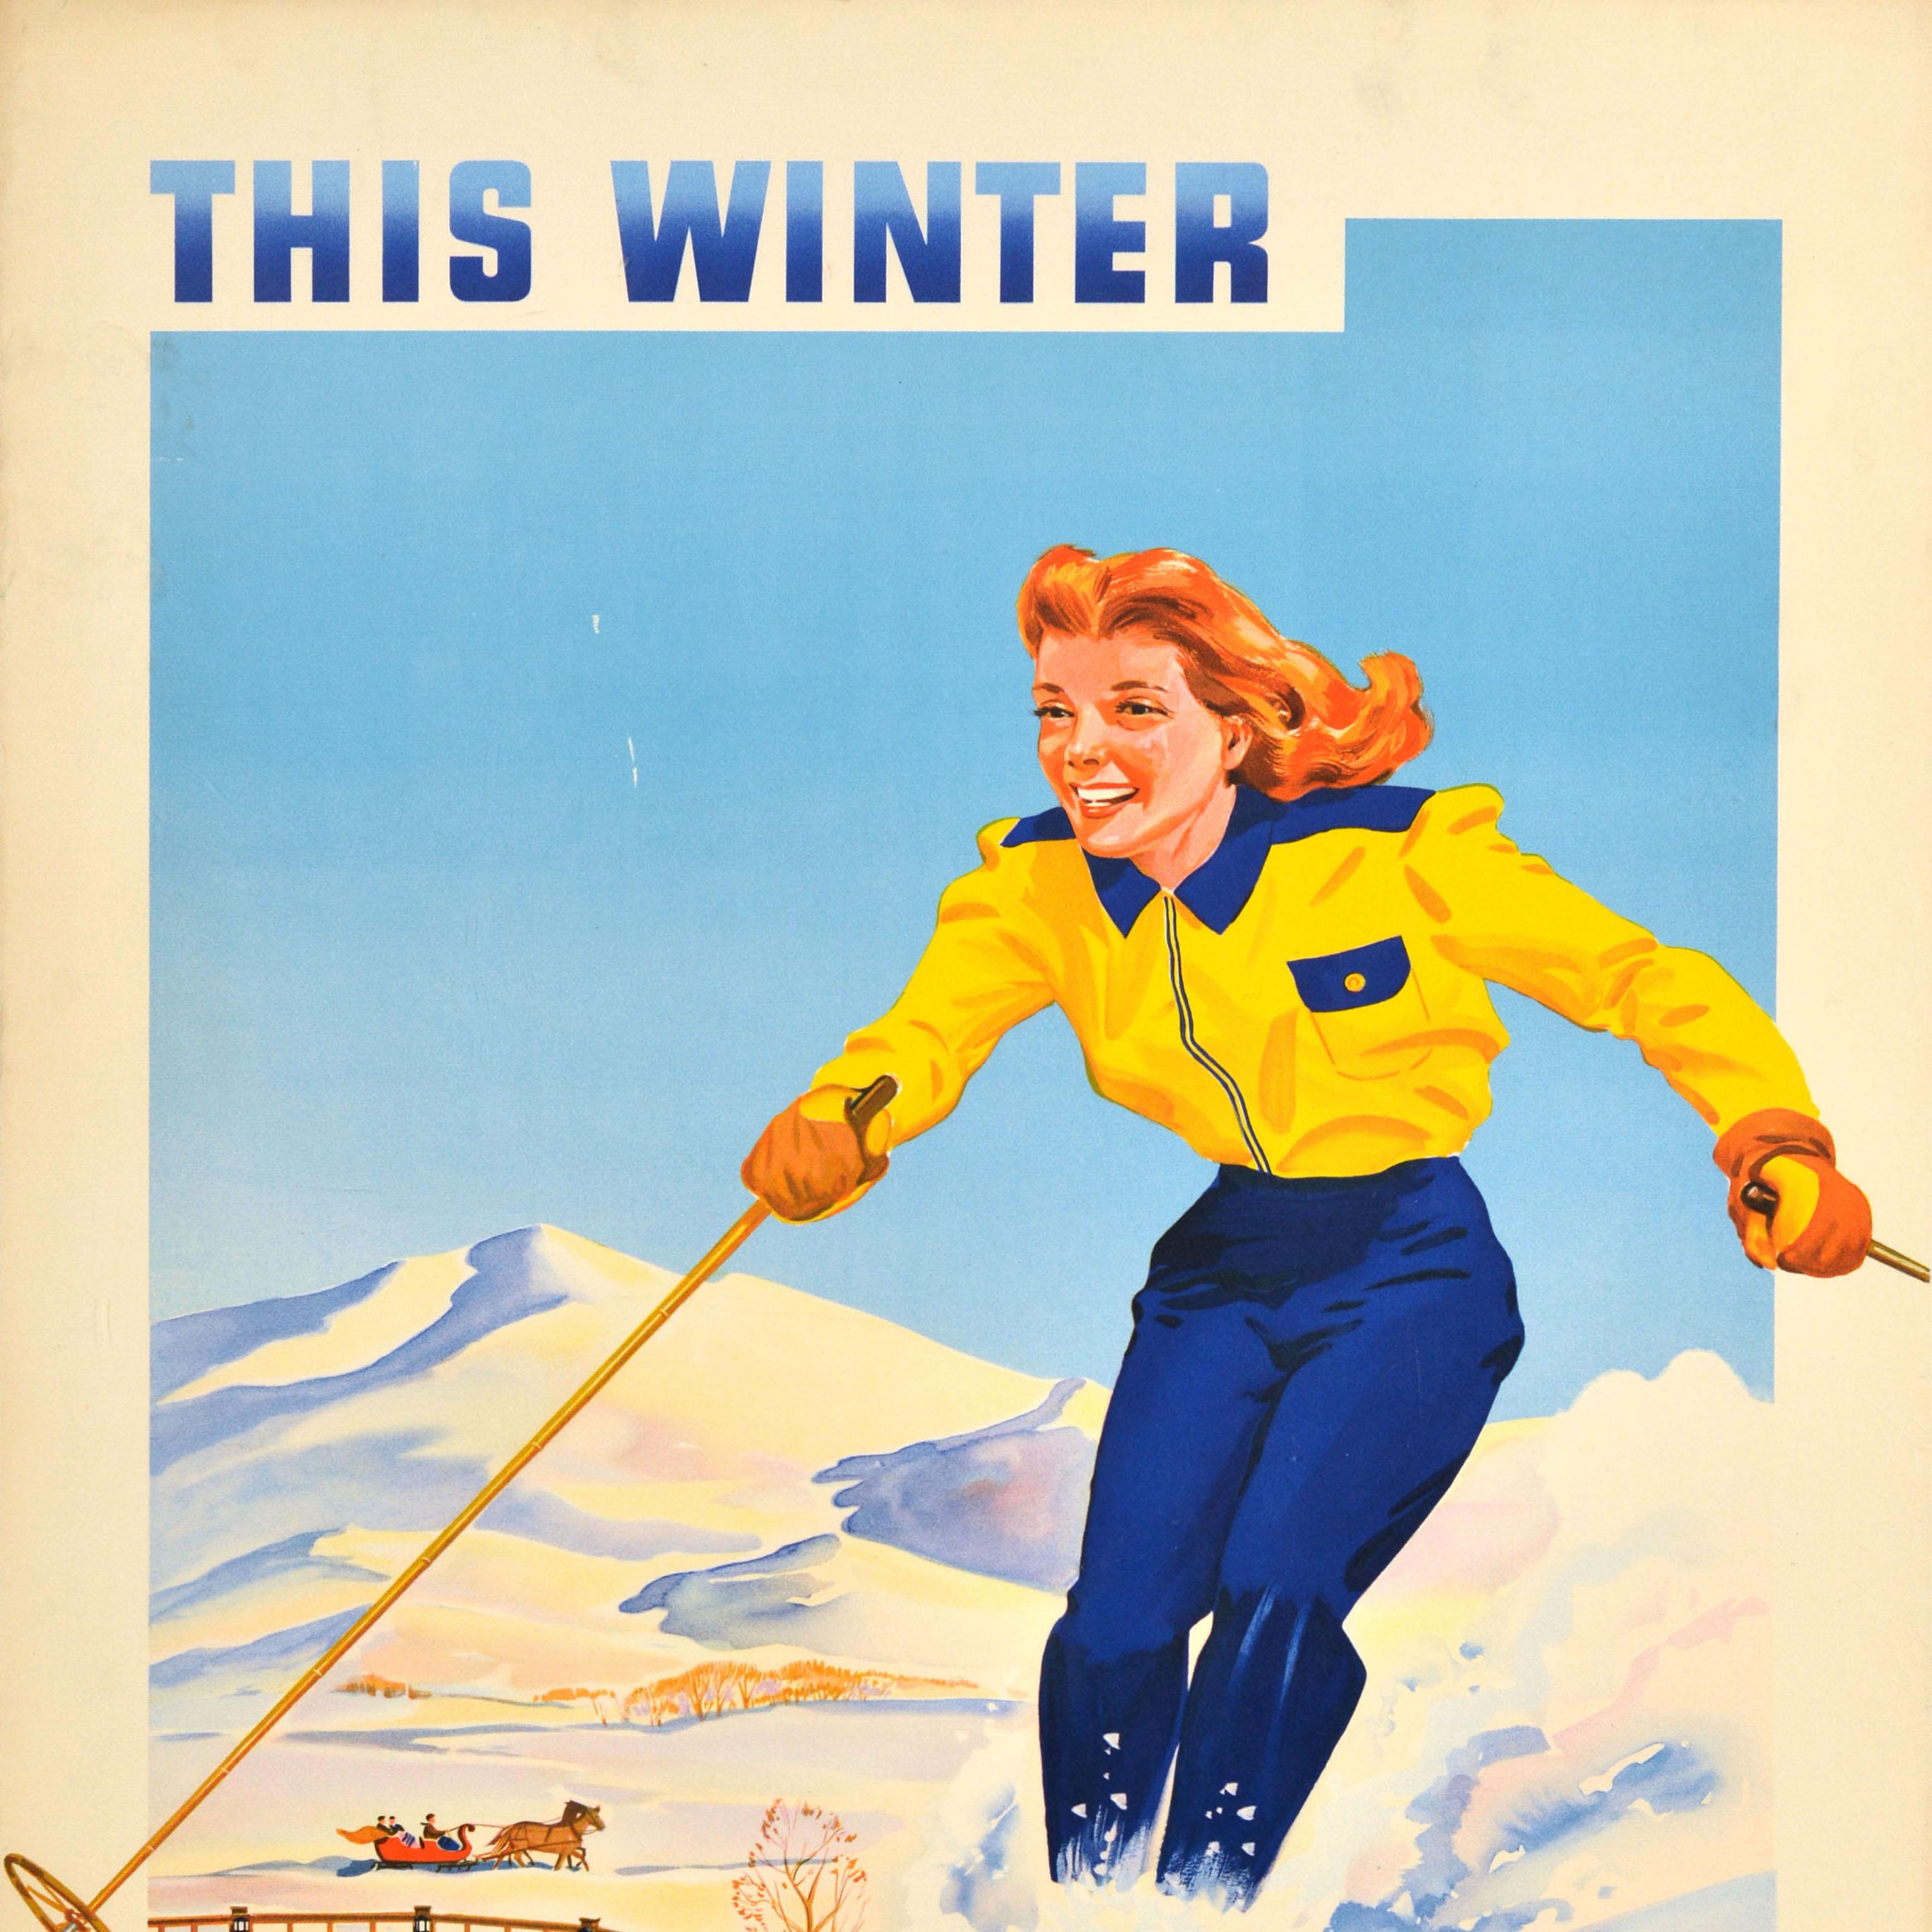 Original Vintage Winter Ski Sports Travel Poster This Winter Sun Valley Idaho - Gray Print by Unknown